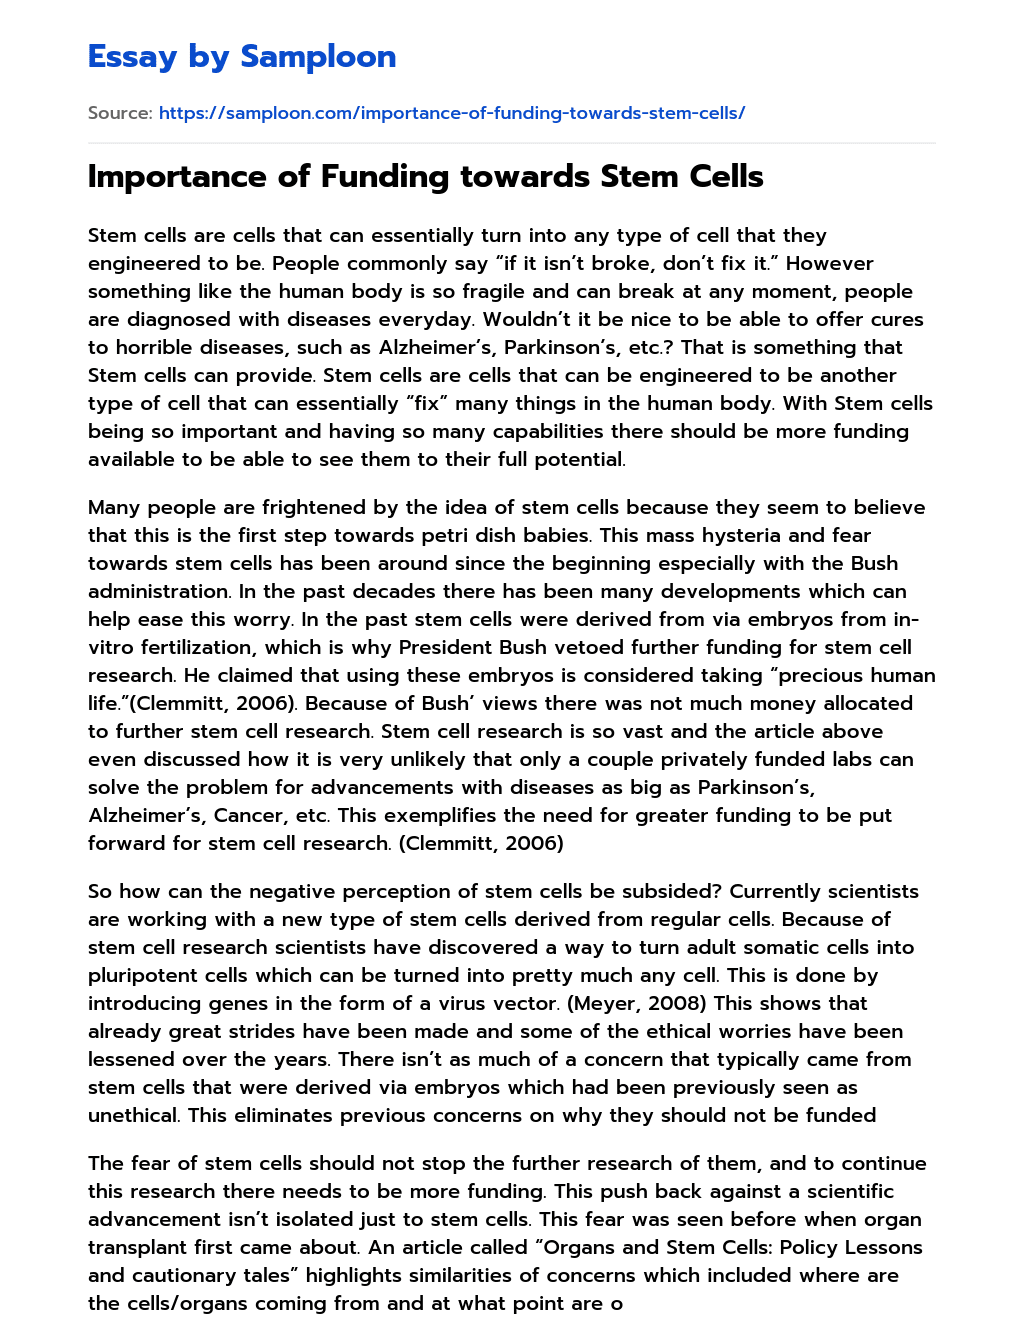 Importance of Funding towards Stem Cells essay